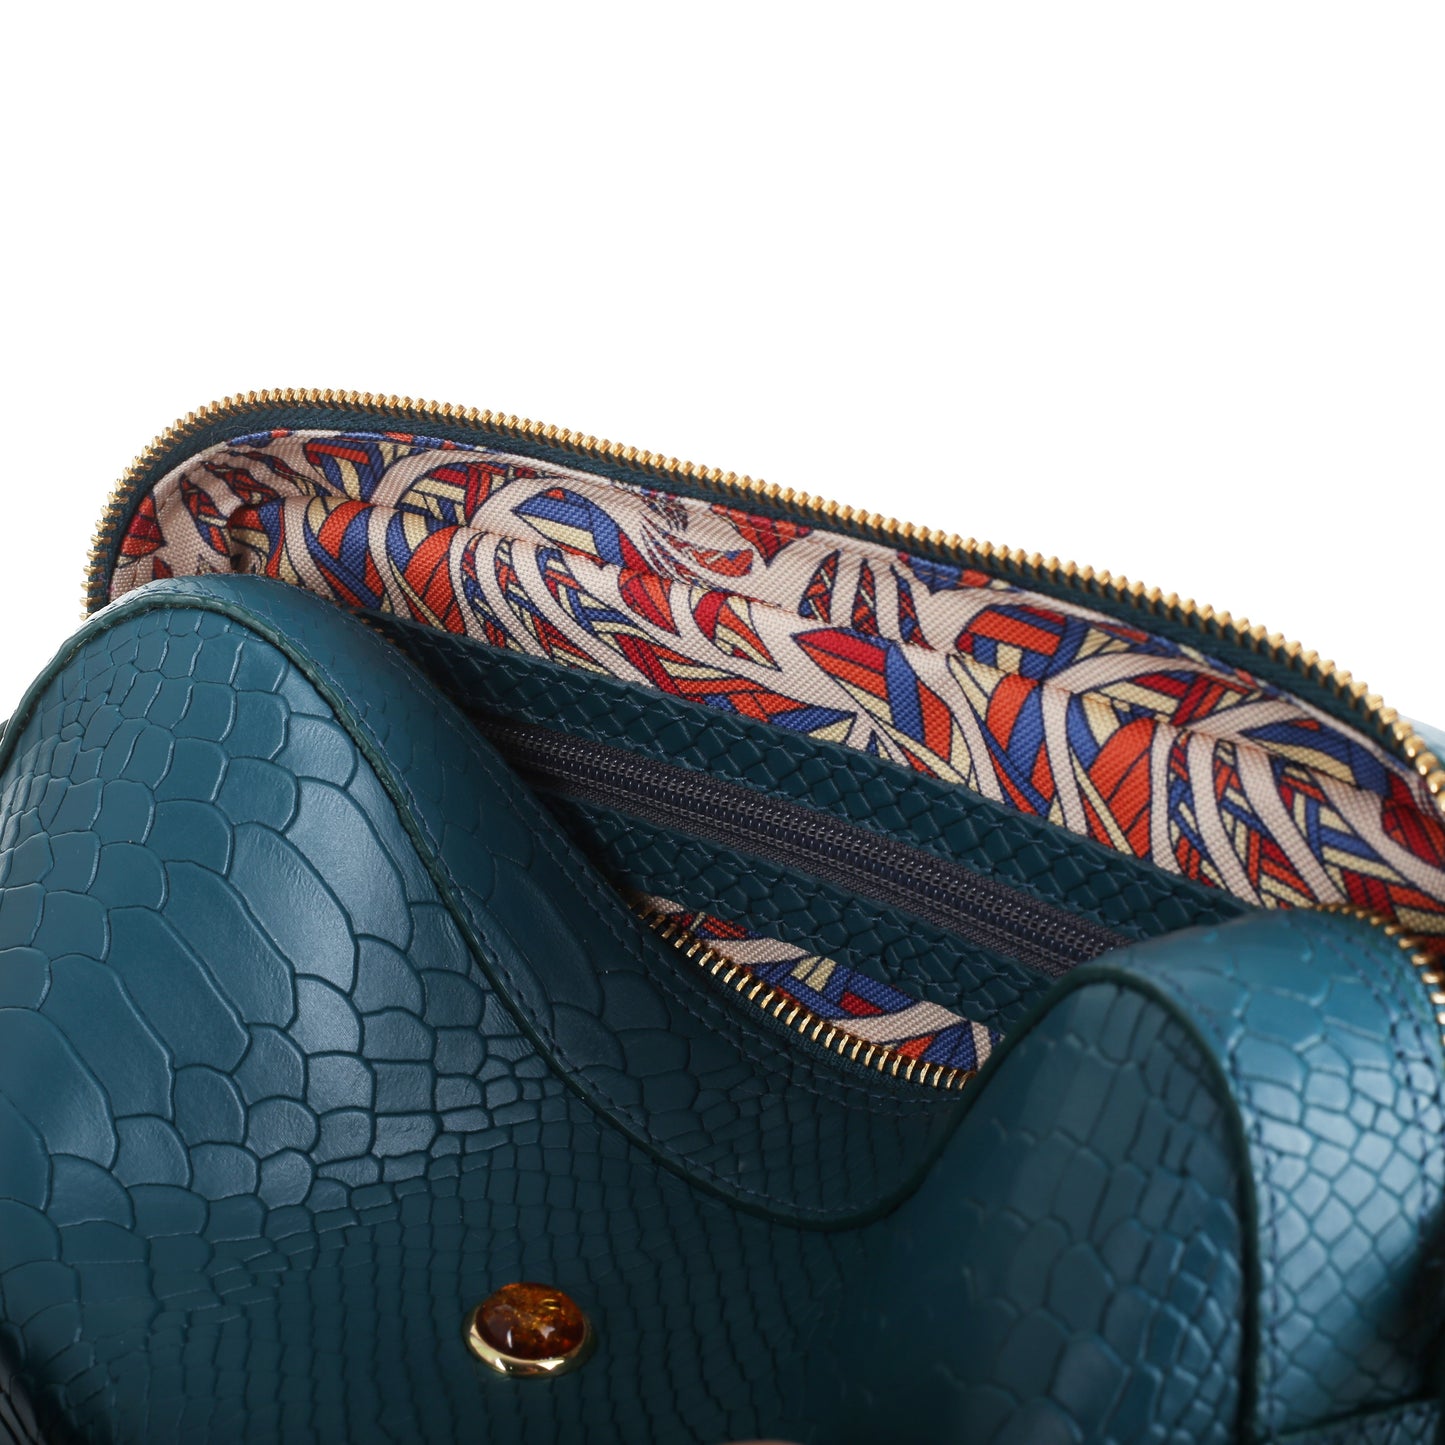 ALFIE DARK TURQUOISE women's leather handbag